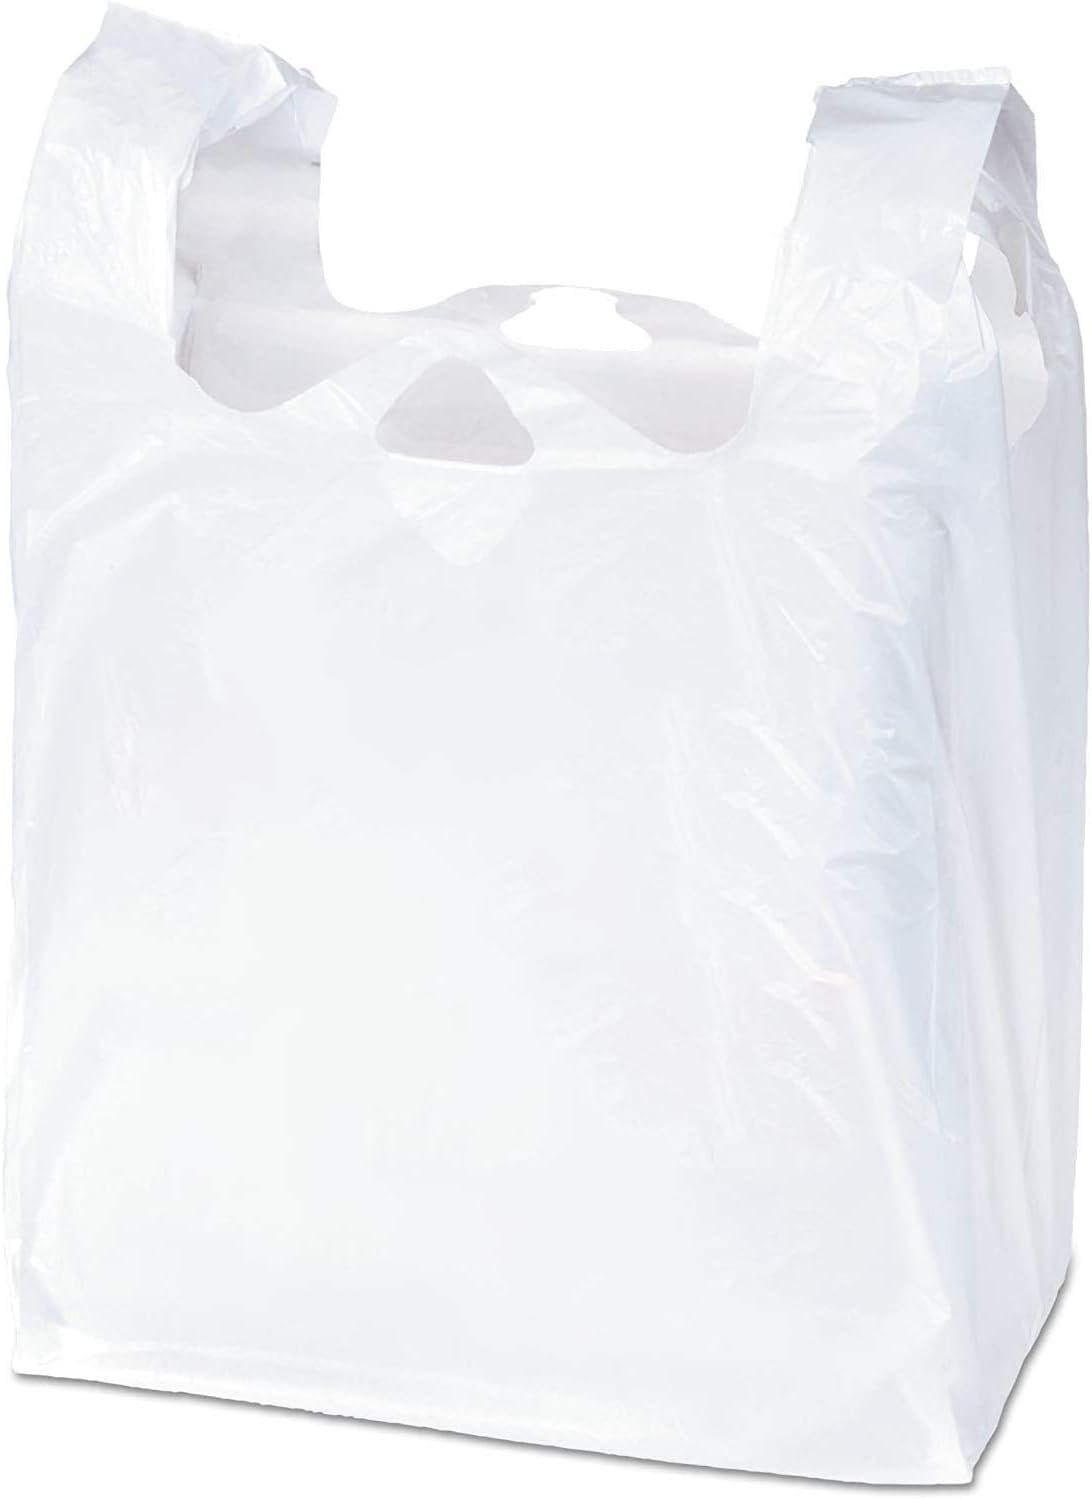 Amazon.com: Black Printed HDPE T-Shirt Plastic Bags - 1/6 BBL 11.5